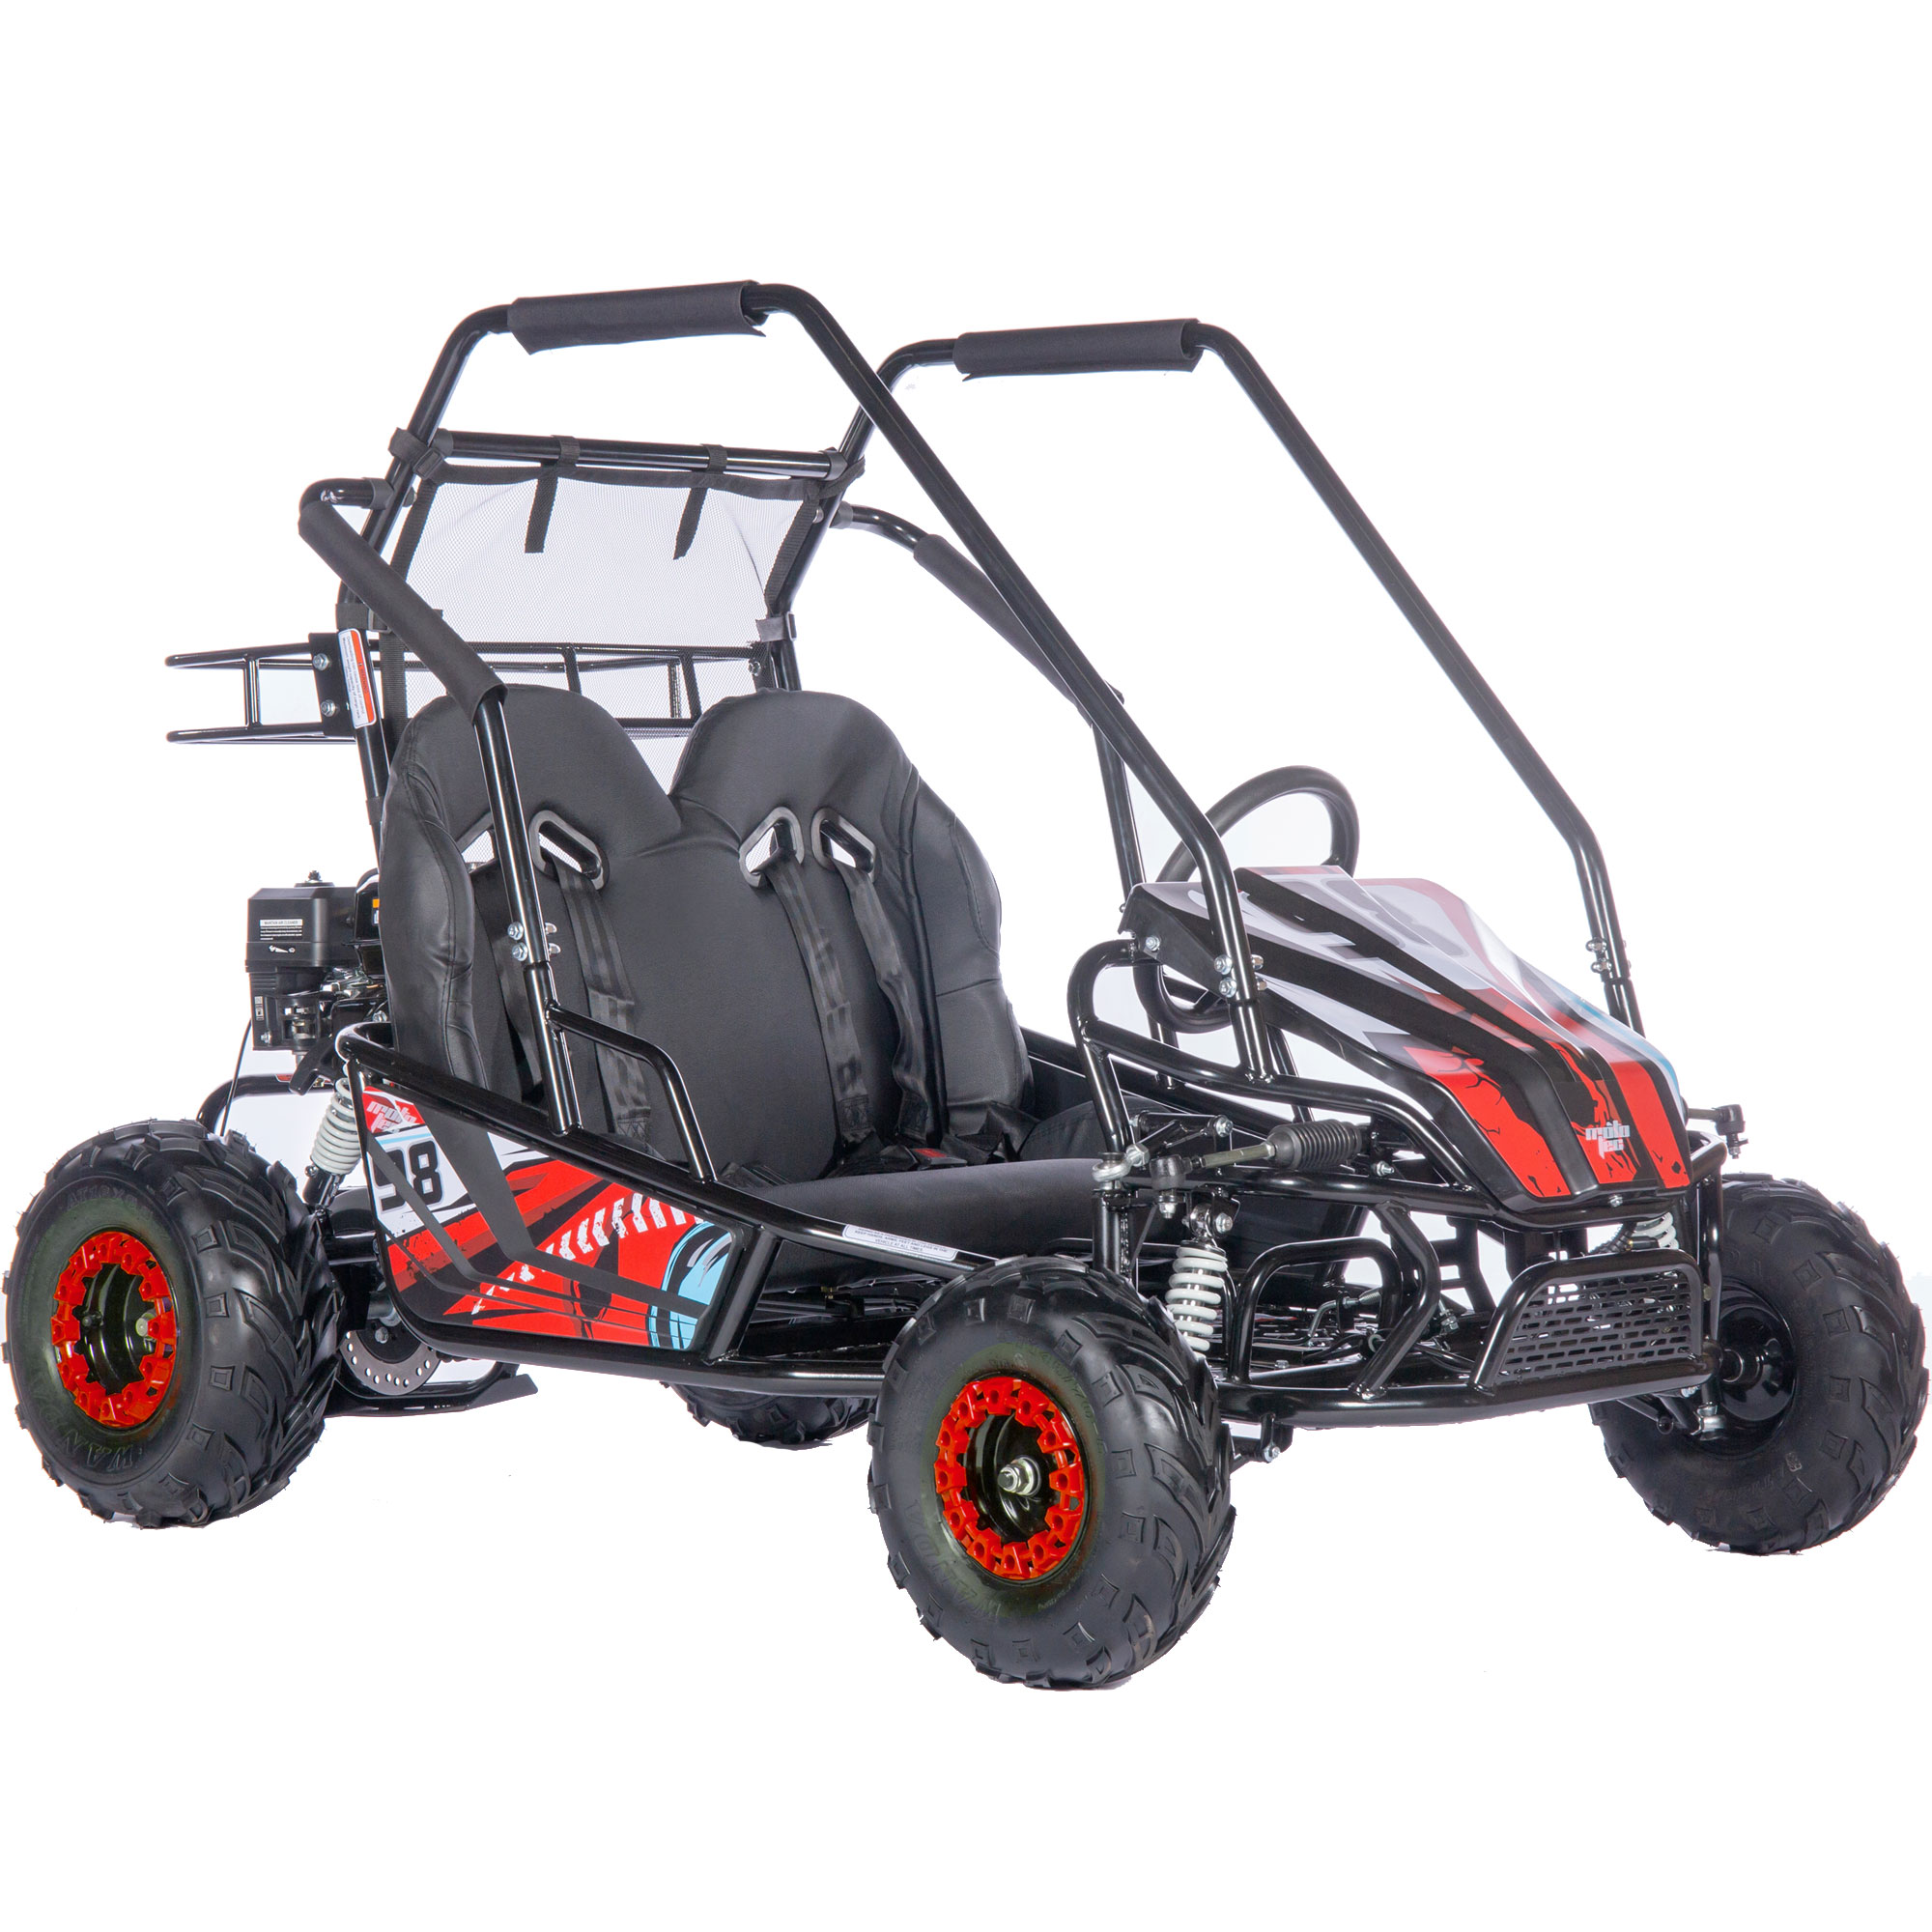 MotoTec Mud Monster XL 212cc 2 Seat Go Kart Full Suspension Red - image 1 of 8